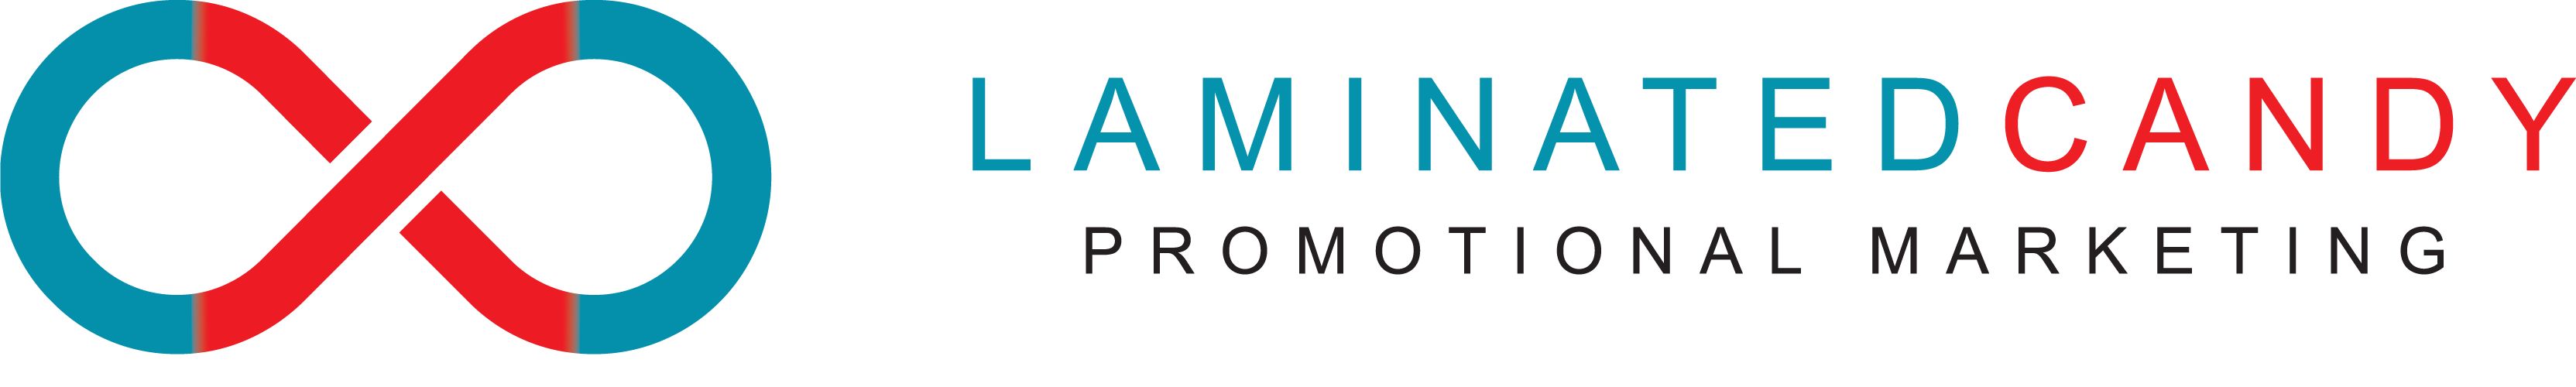 Laminated Candy LLC's Logo